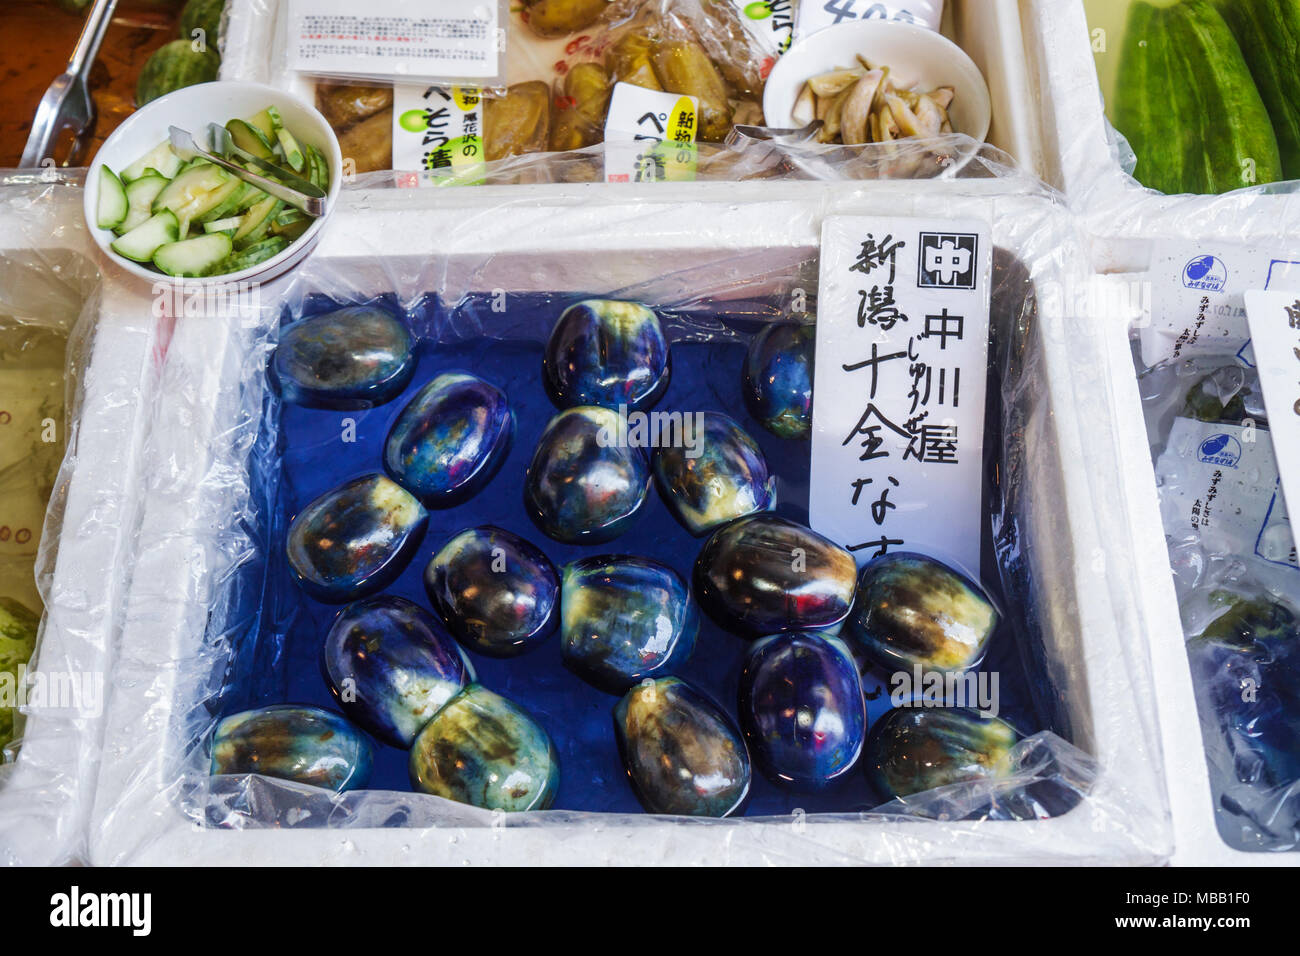 Tokyo Japan,Tsukiji Fish Market,shopping shopper shoppers shop shops markets marketplace buying selling,retail store stores business businesses,kanji, Stock Photo